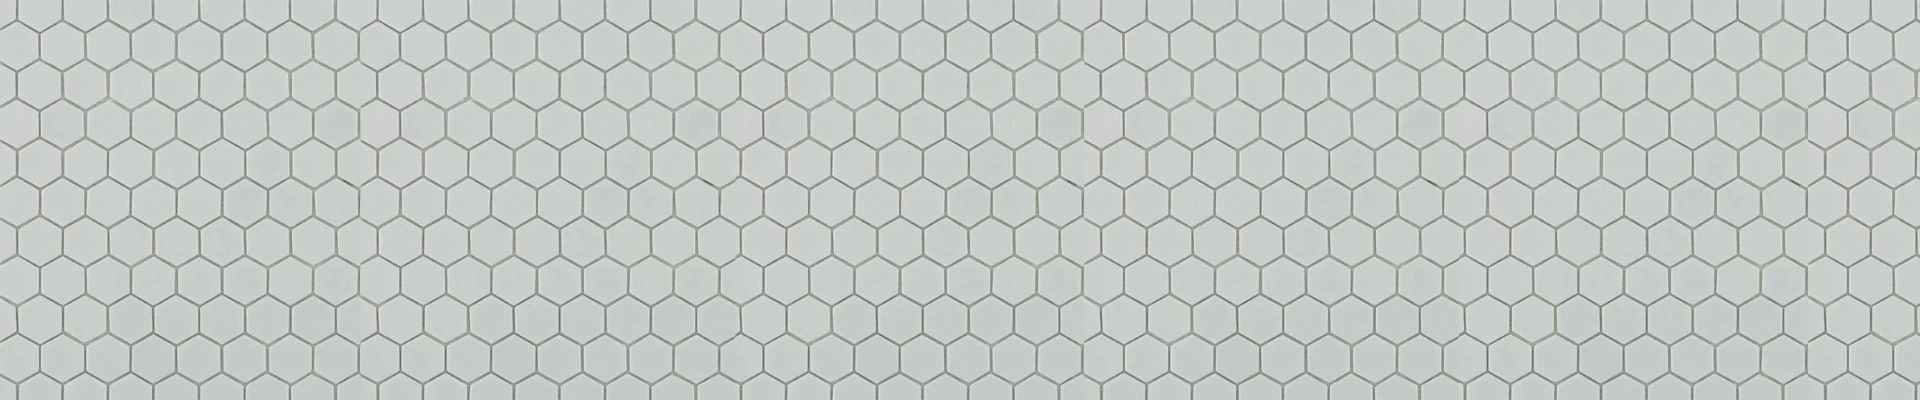 gresite hexagonal para piscina gris